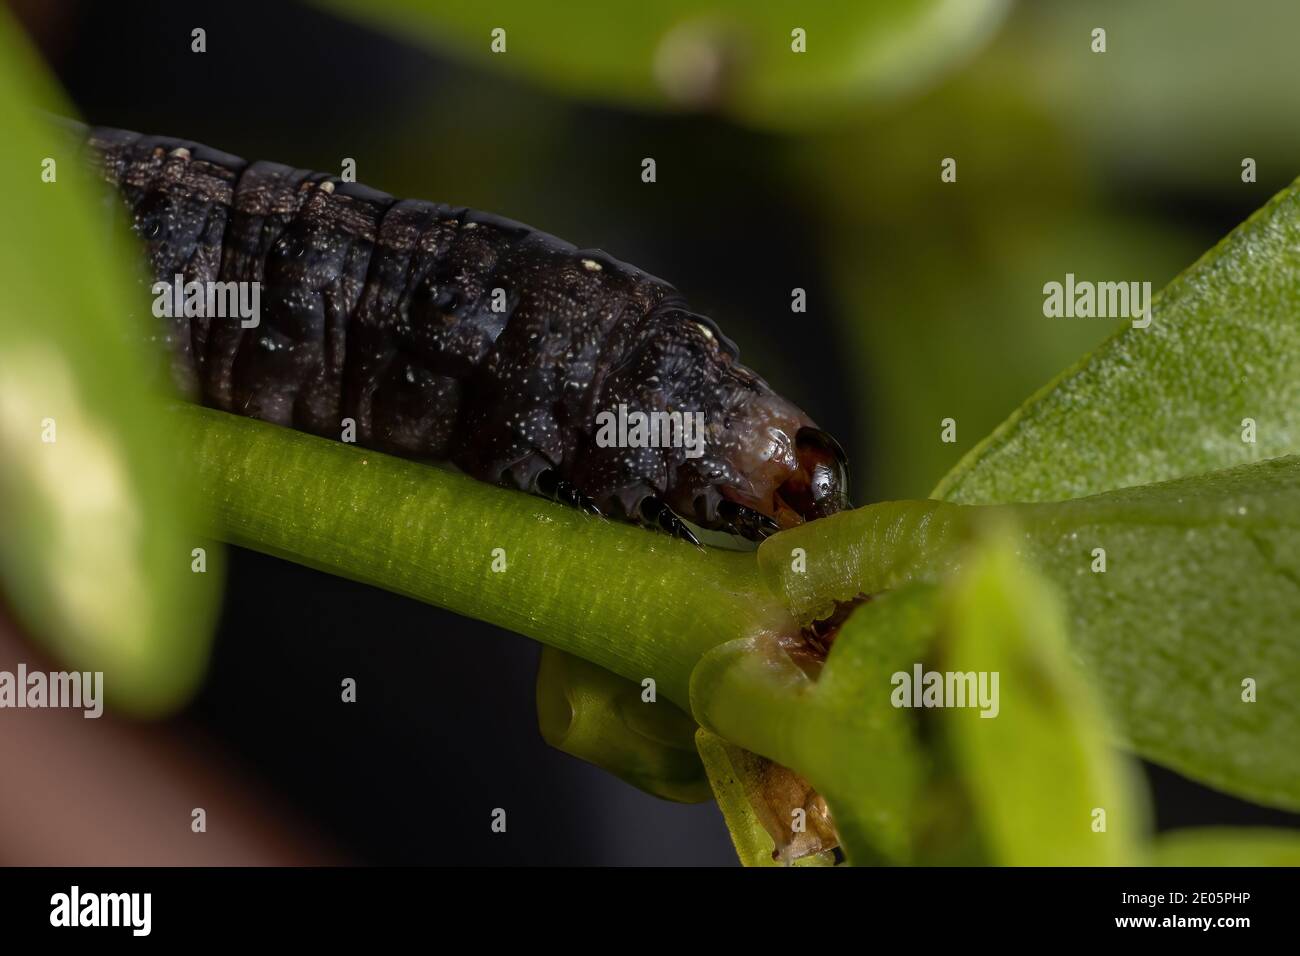 Caterpillar of the genus Spodoptera eating the Common Purslane plant of the species Portulaca oleracea Stock Photo